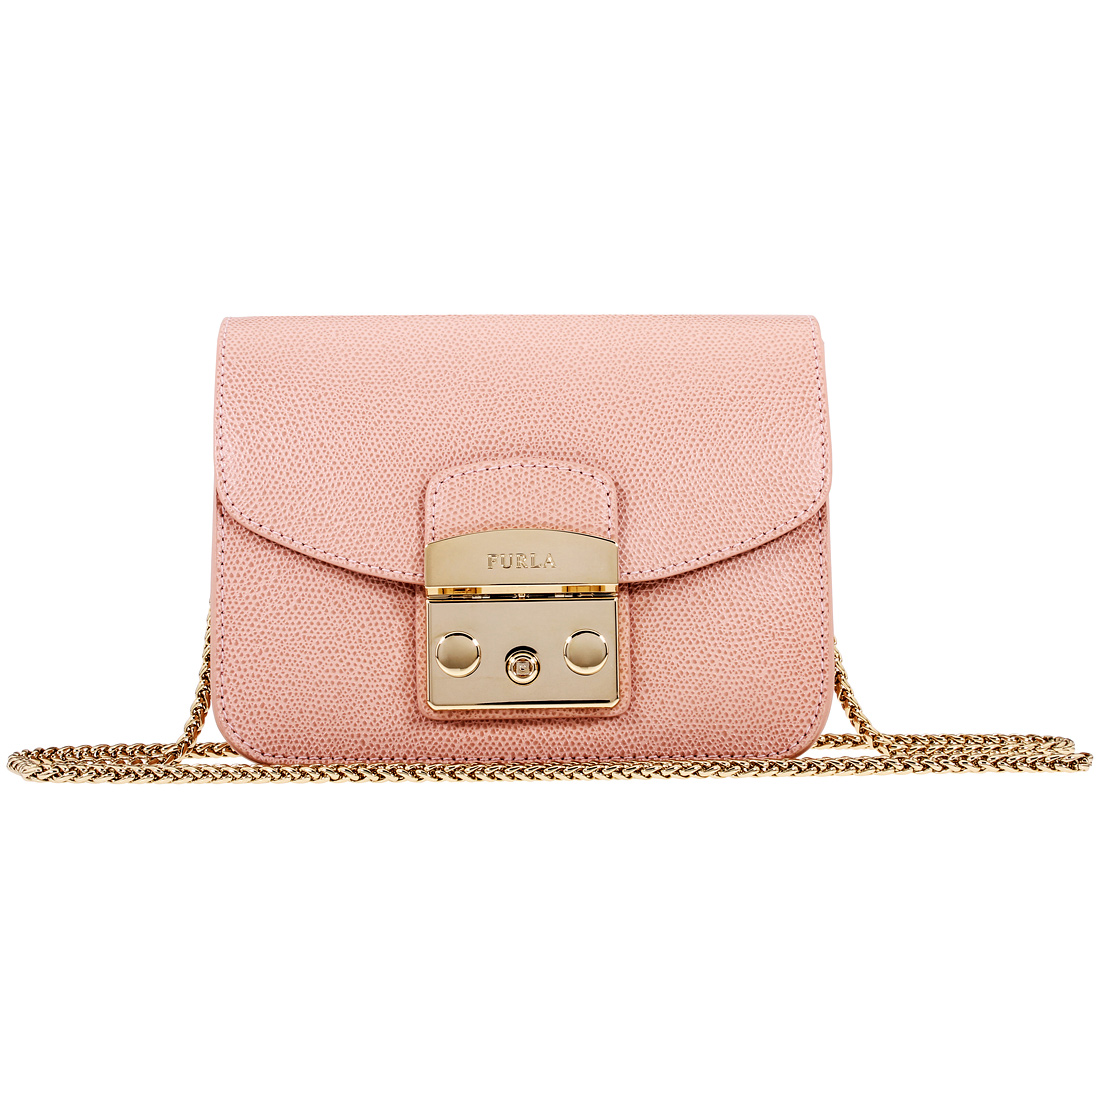 Furla Metropolis Ladies Small Pink Leather Crossbody Bag 851173 | eBay